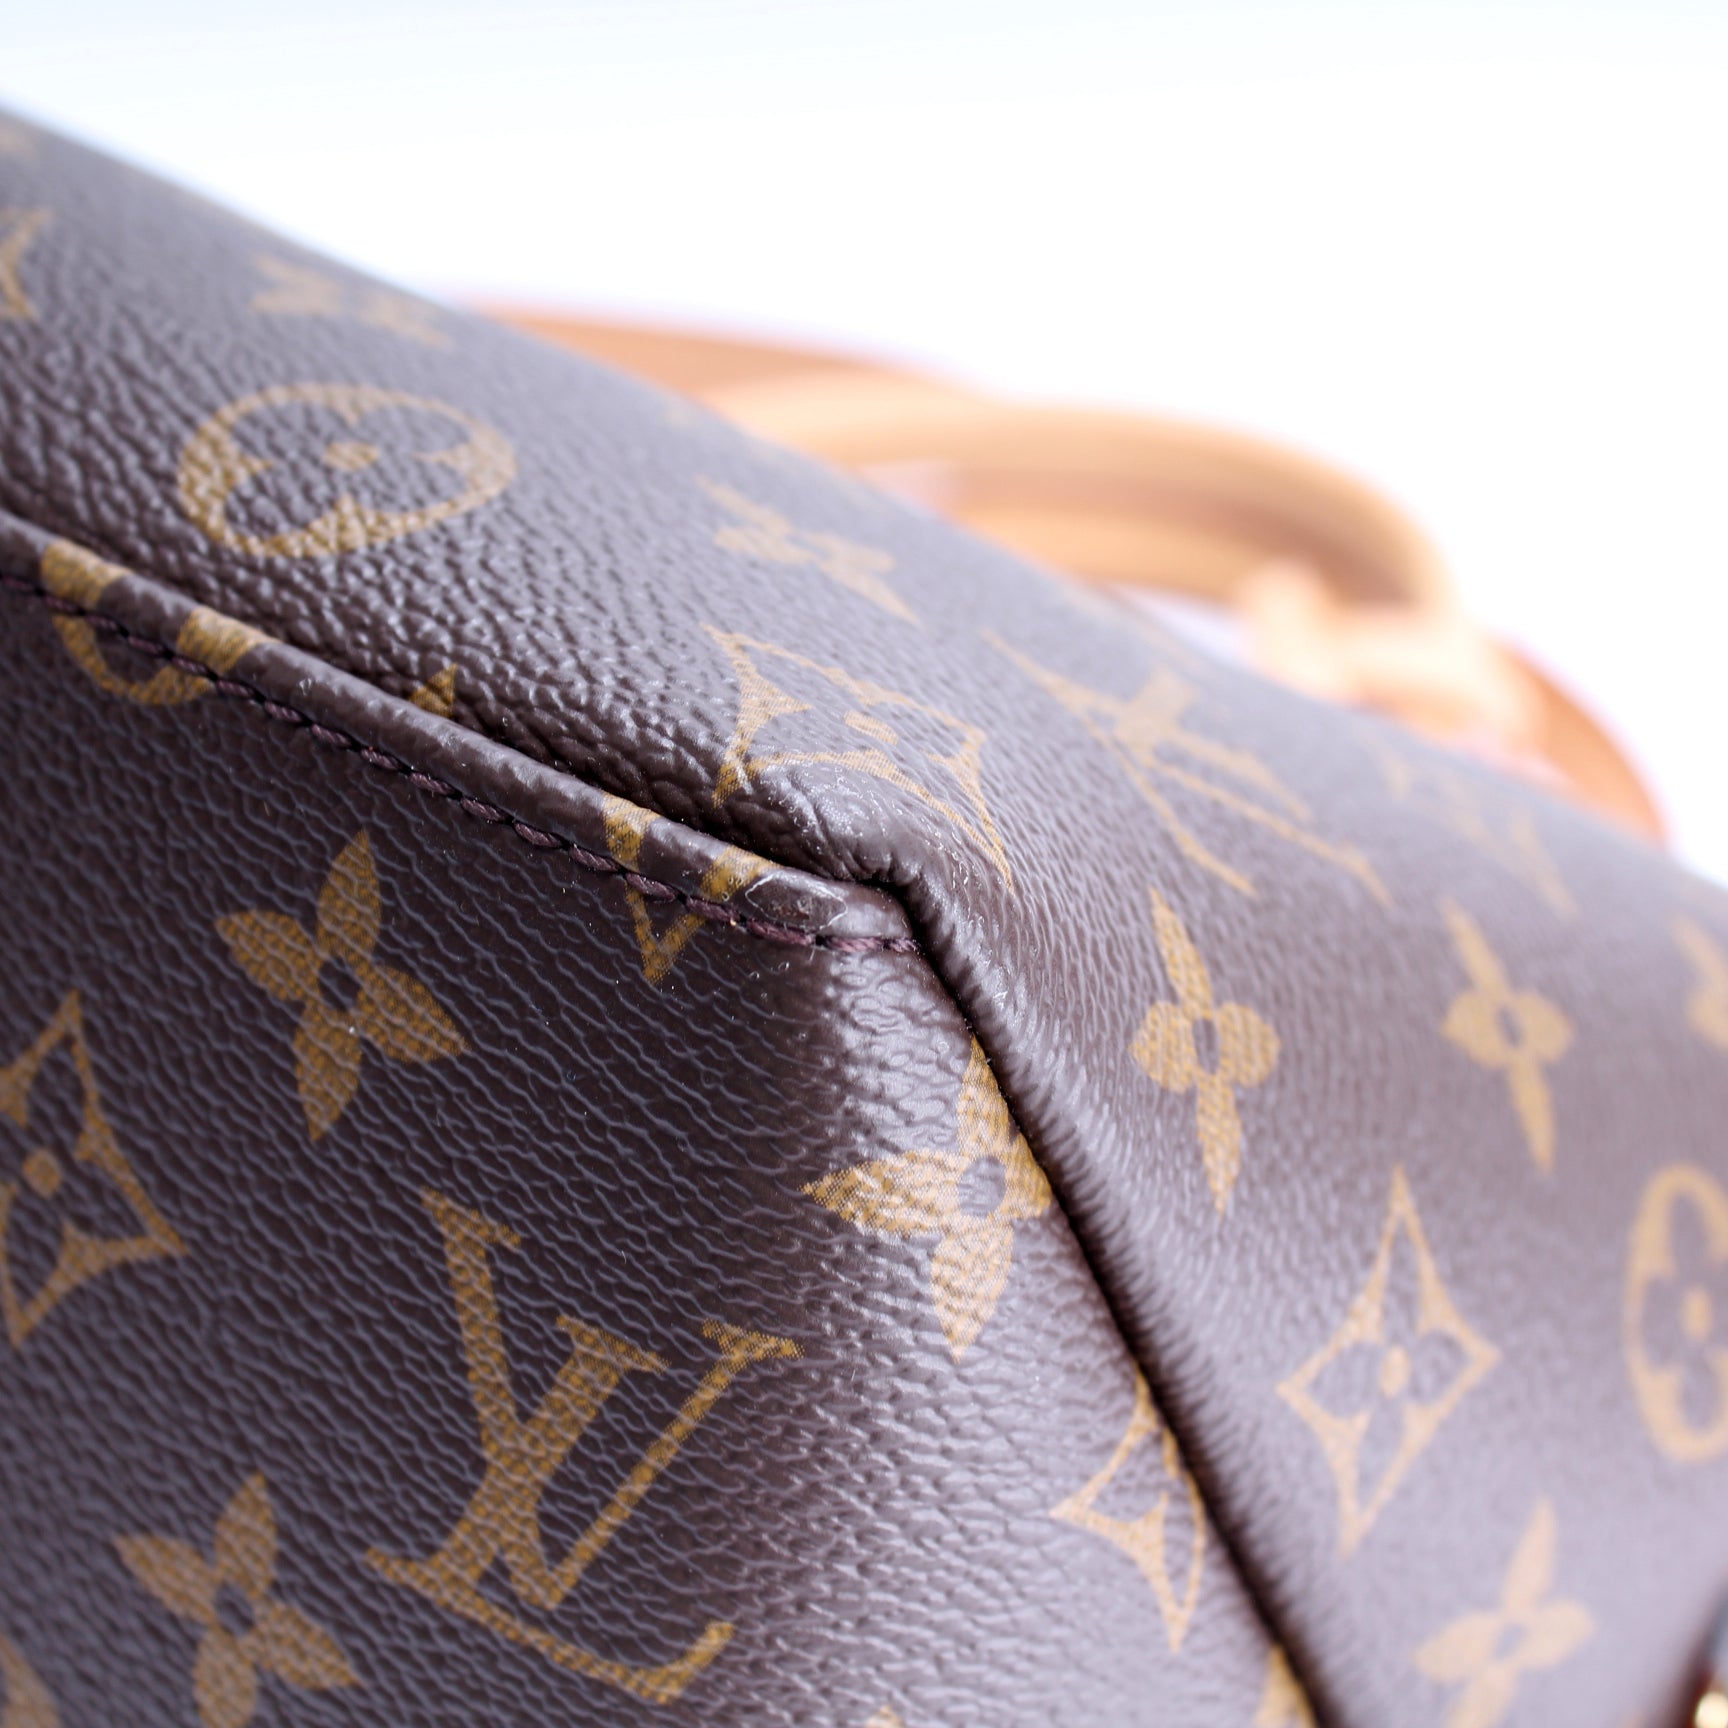 Grand Palais Monogram – Keeks Designer Handbags